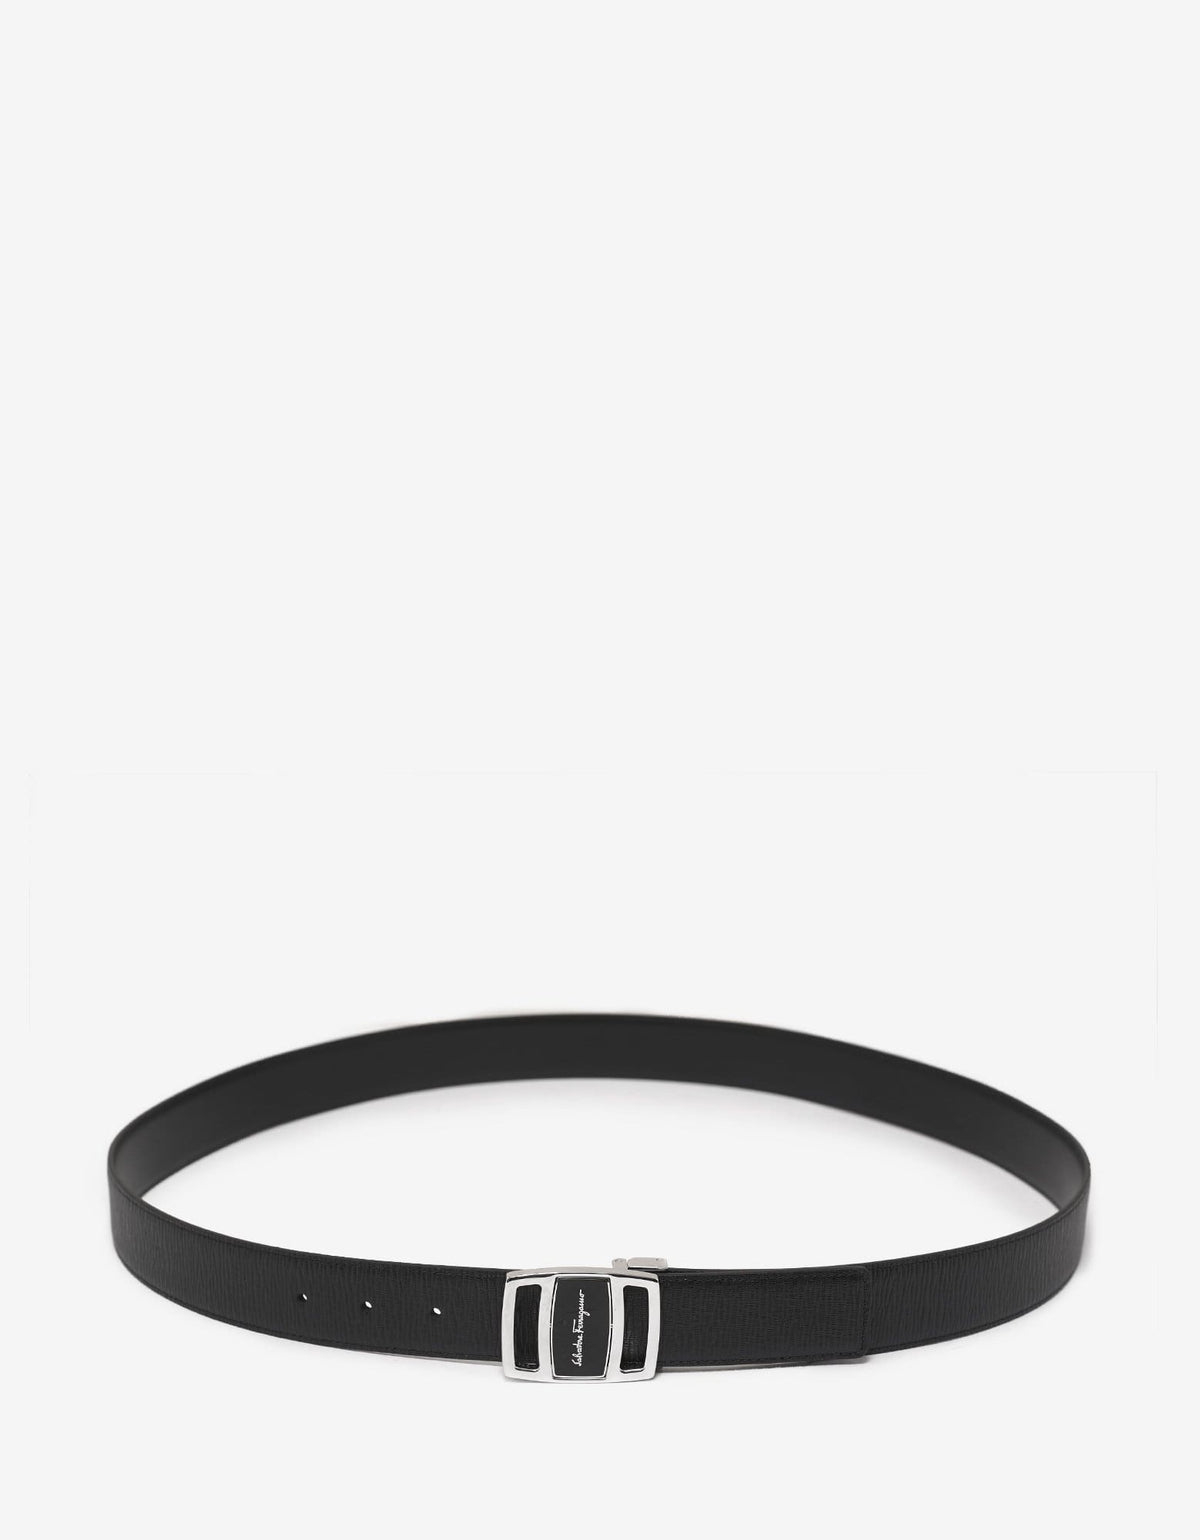 Salvatore Ferragamo Black Leather Vara Buckle Reversible Belt